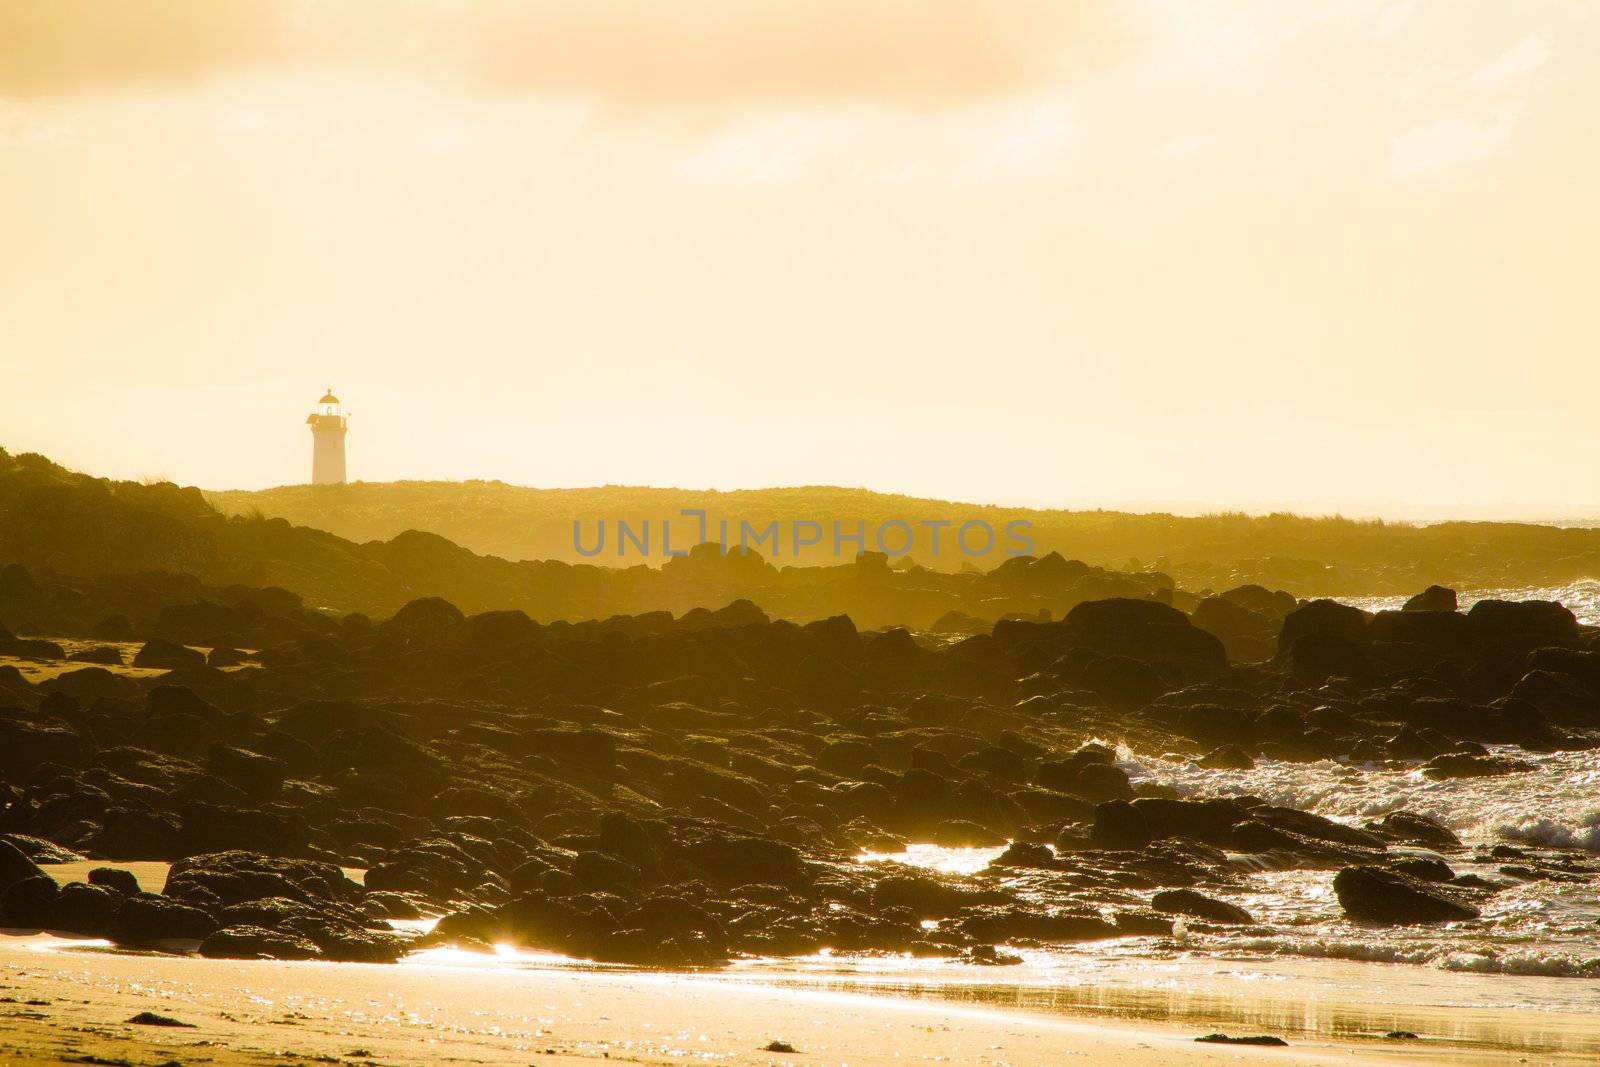 Port Fairy lighthouse beach sunrise with sea fog roll in over black volcanic rock